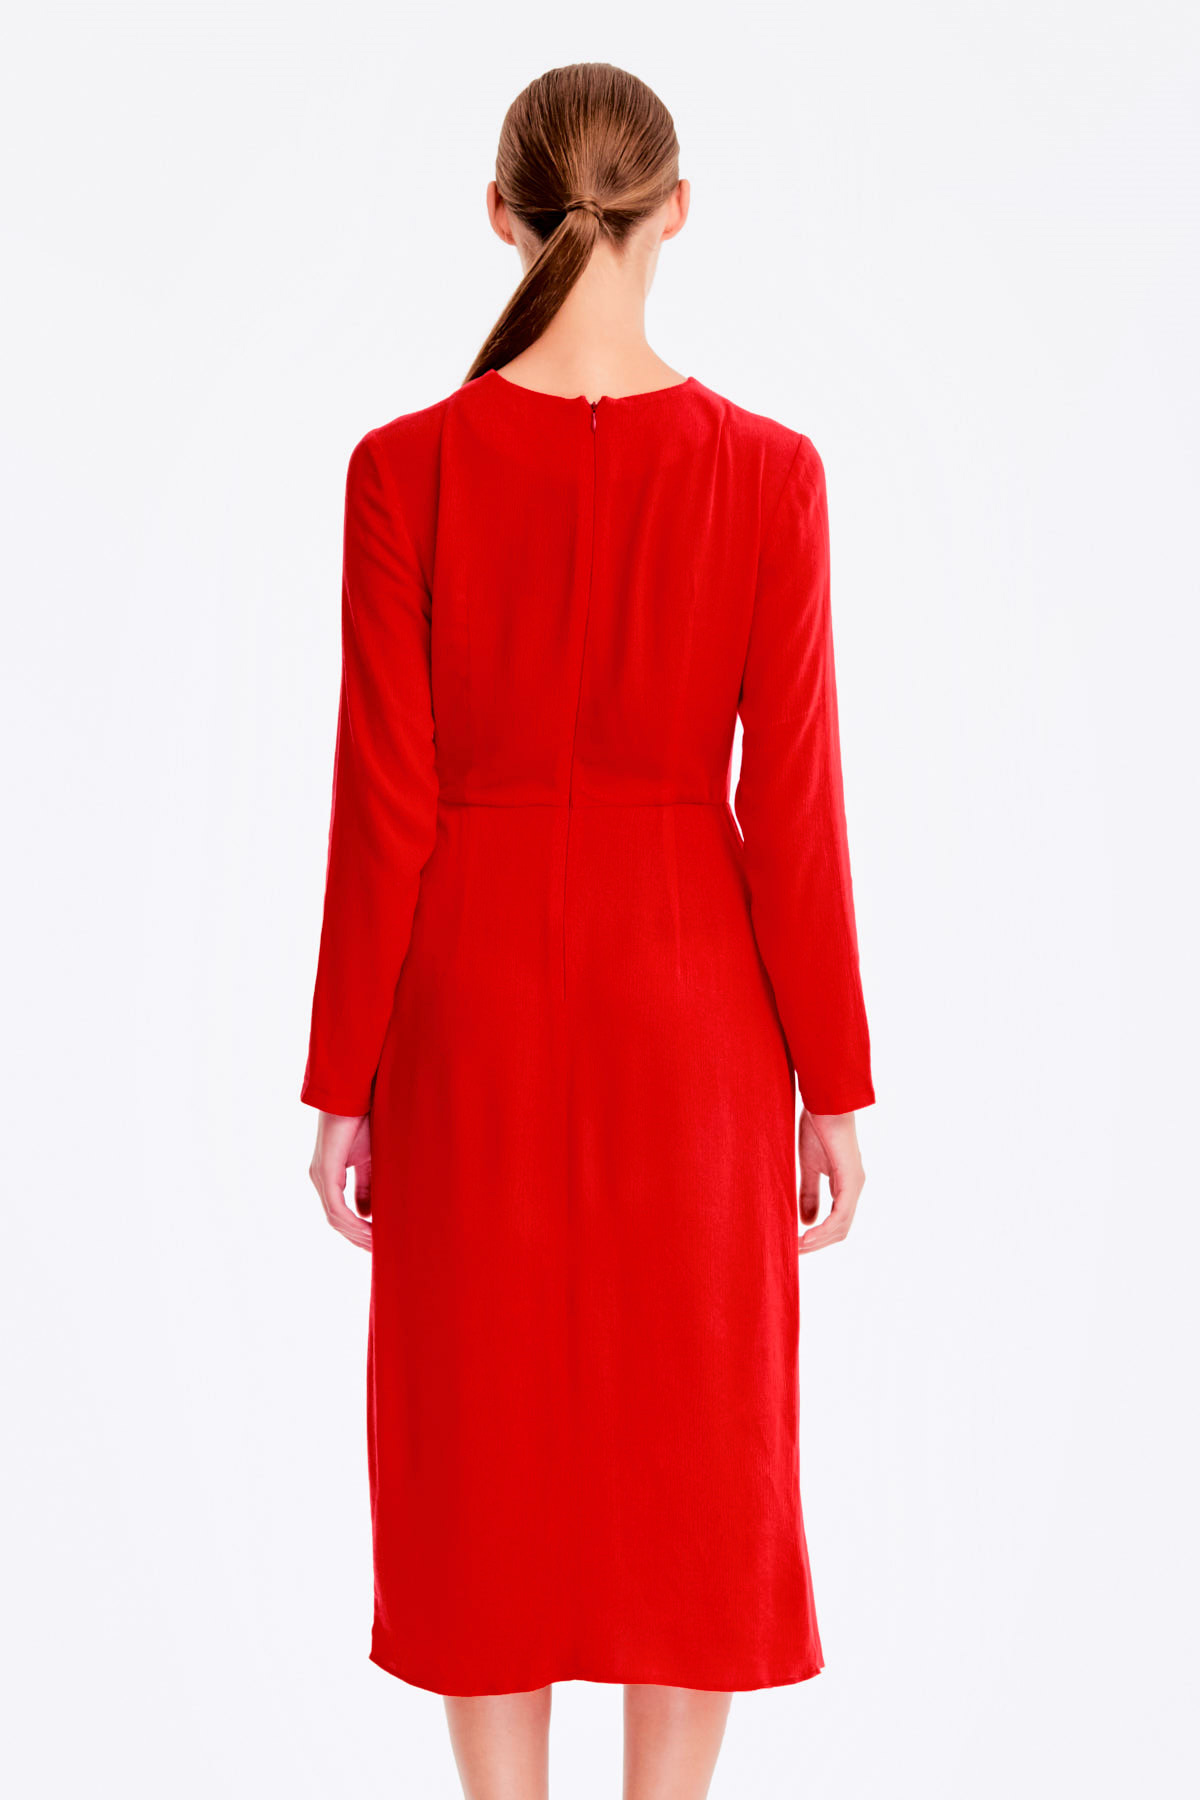 Midi red dress , photo 5